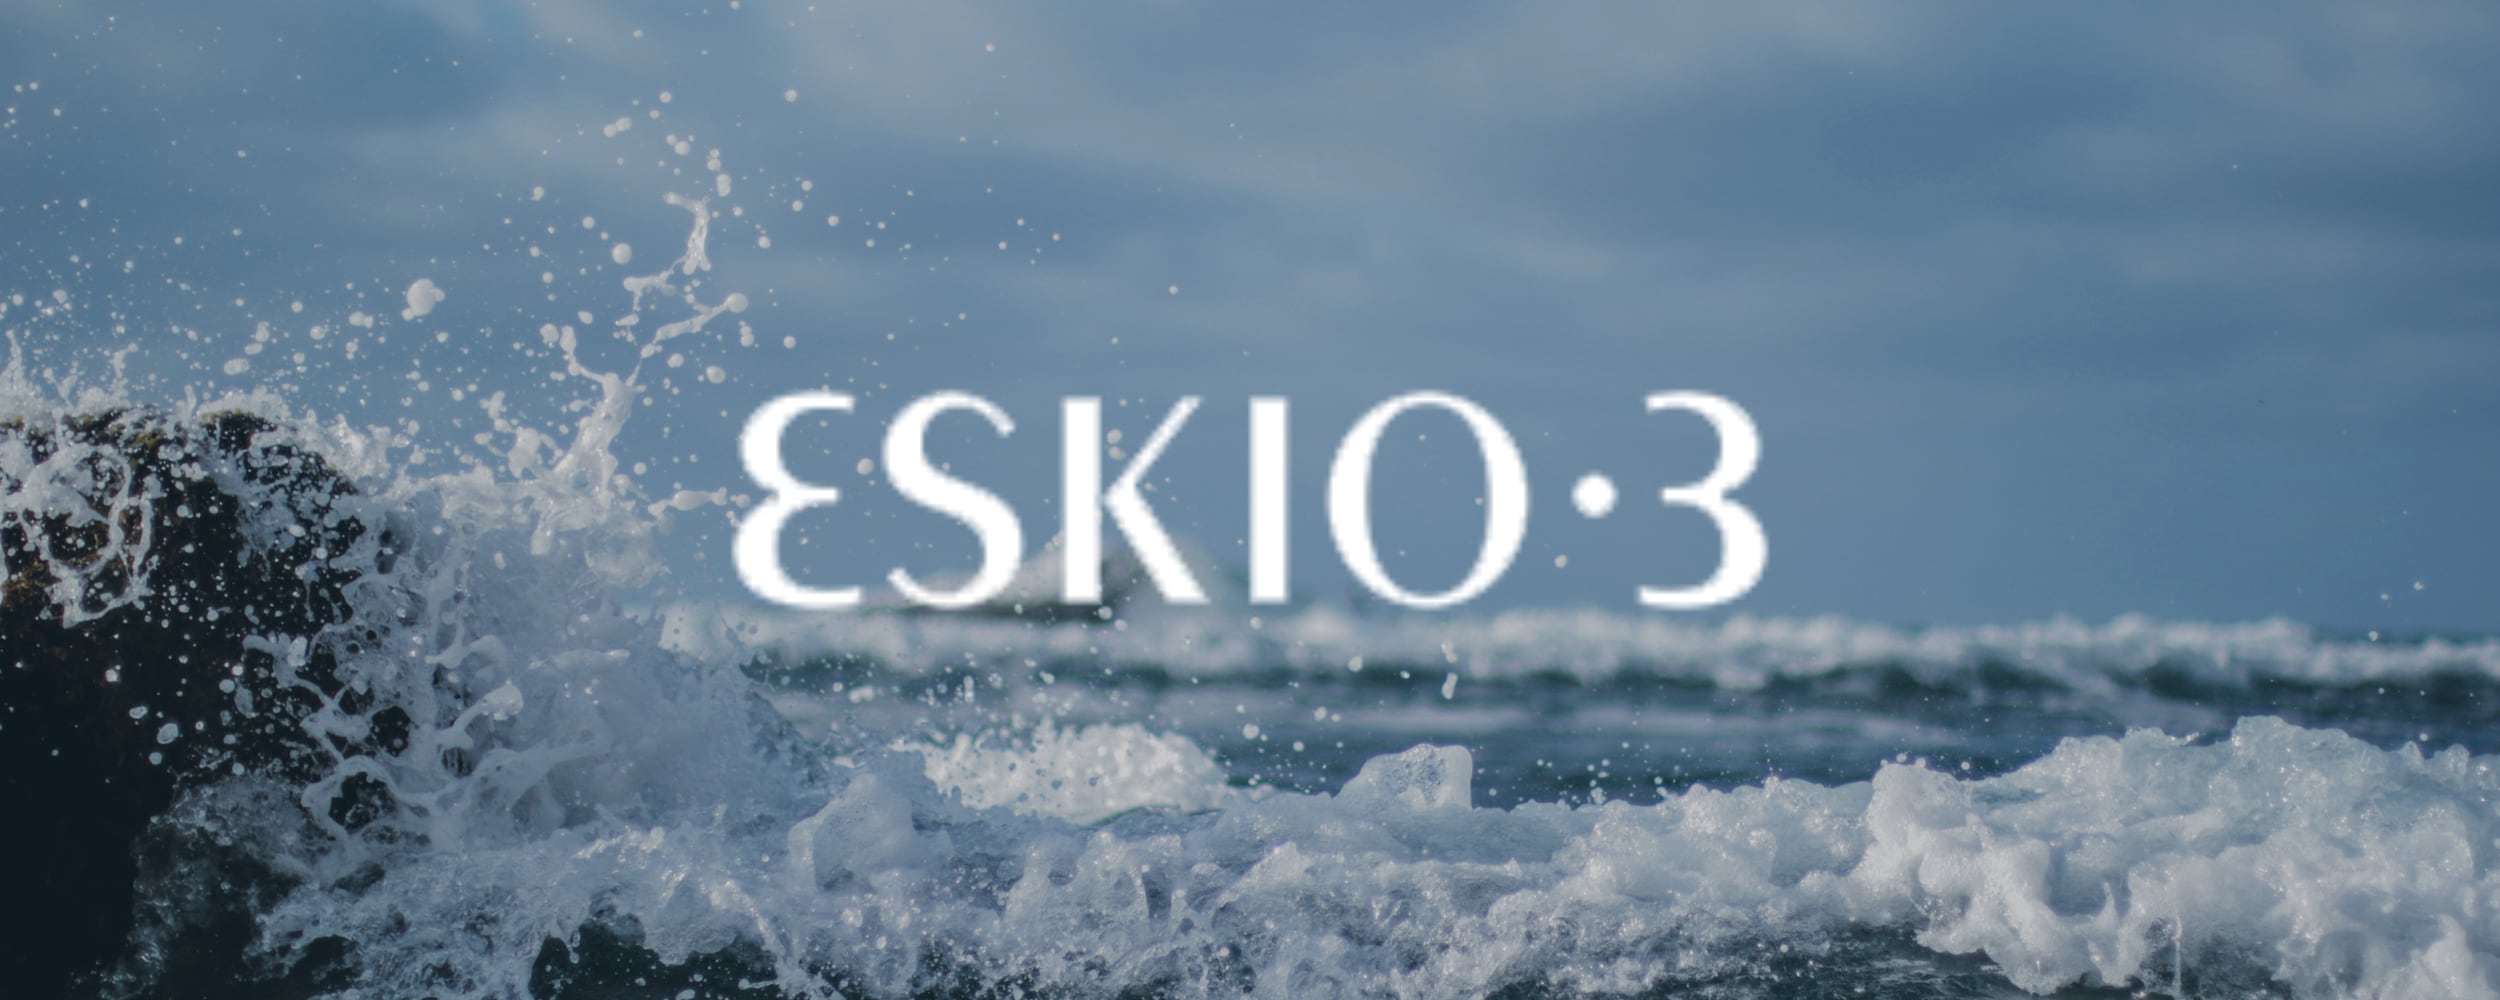 Eskio-3